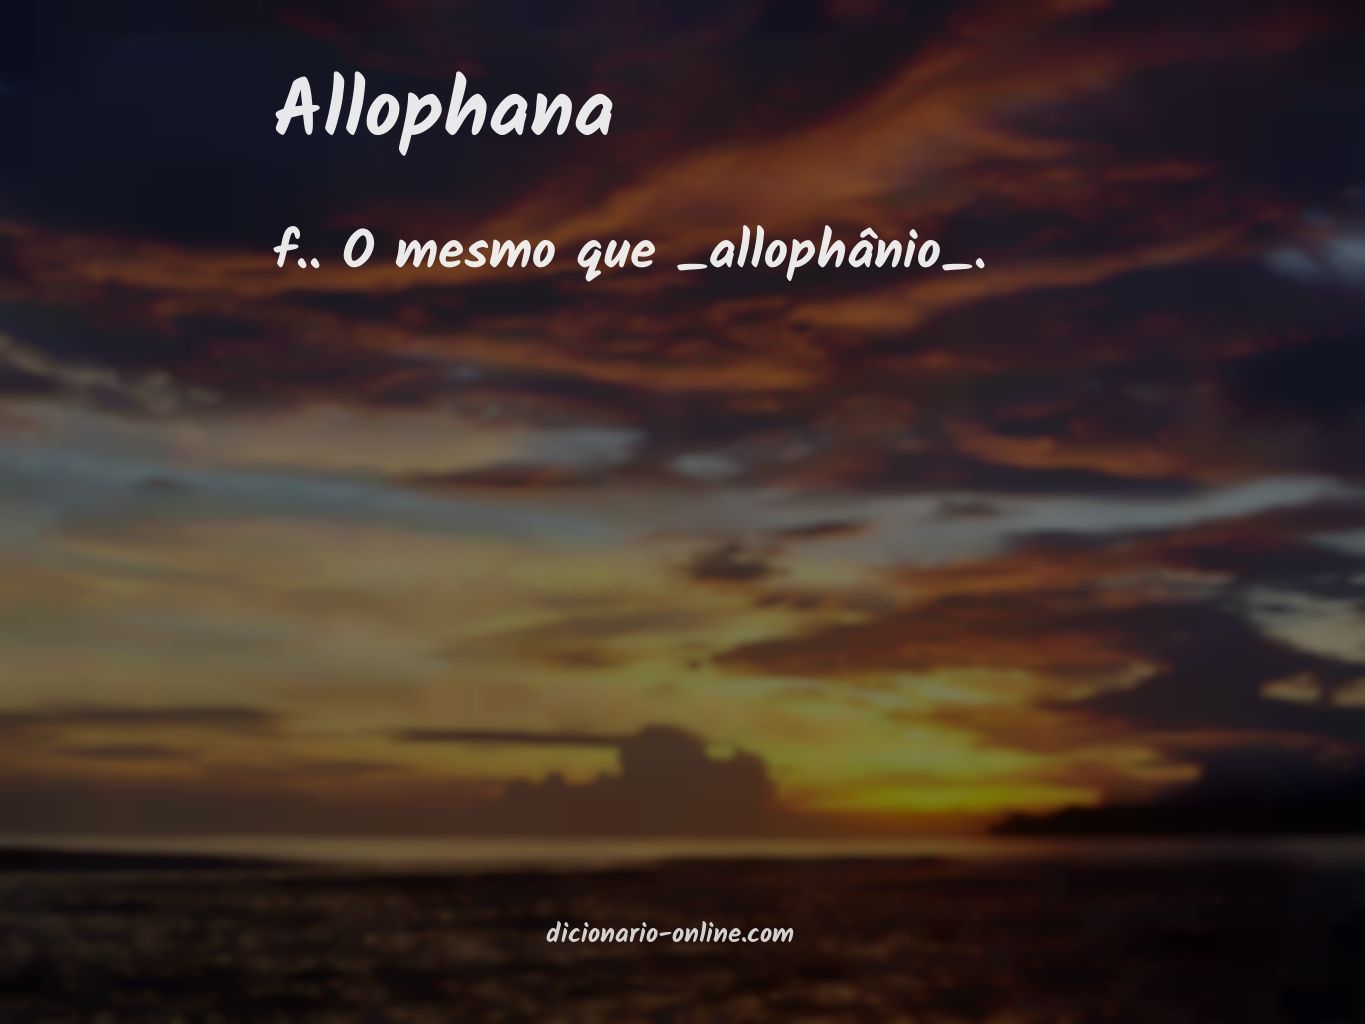 Significado de allophana